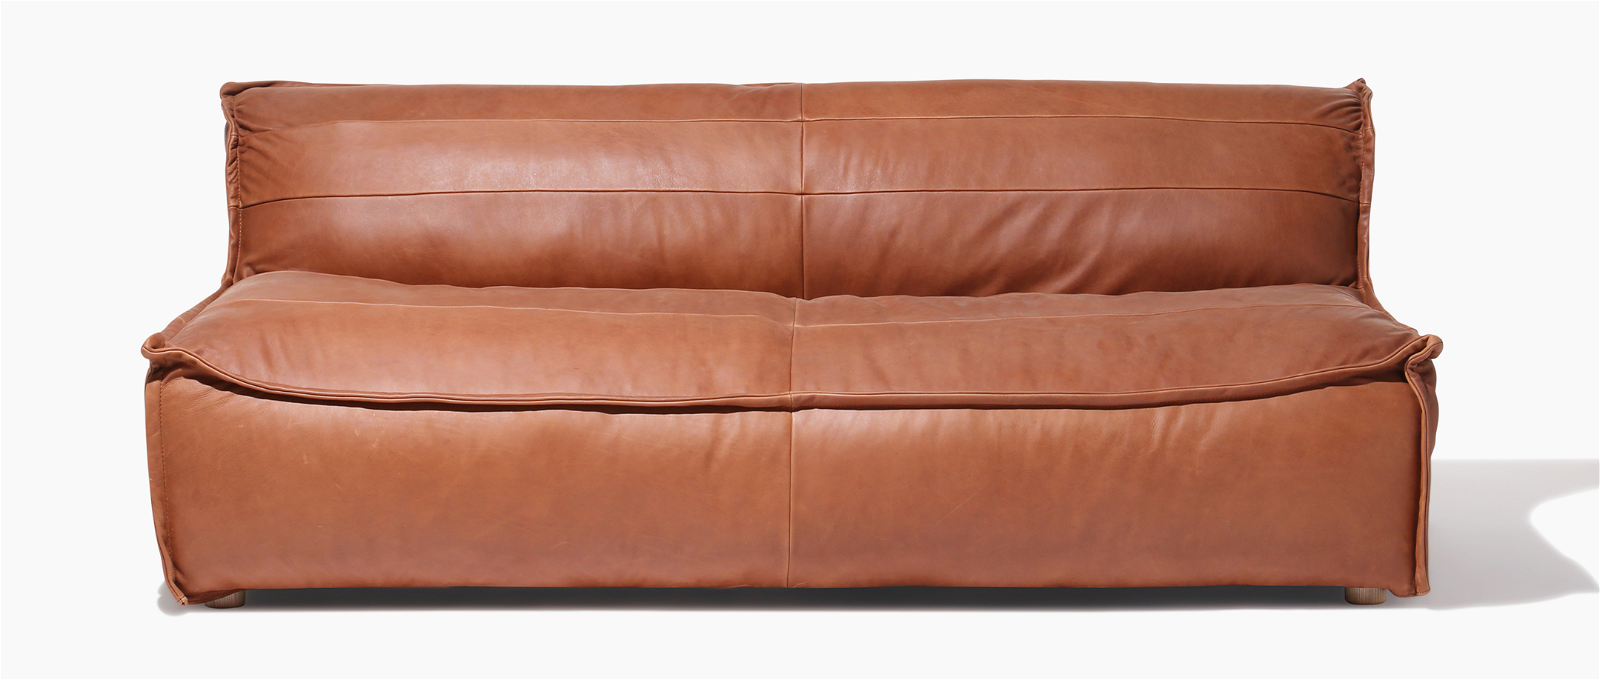 Homecrest Sofa